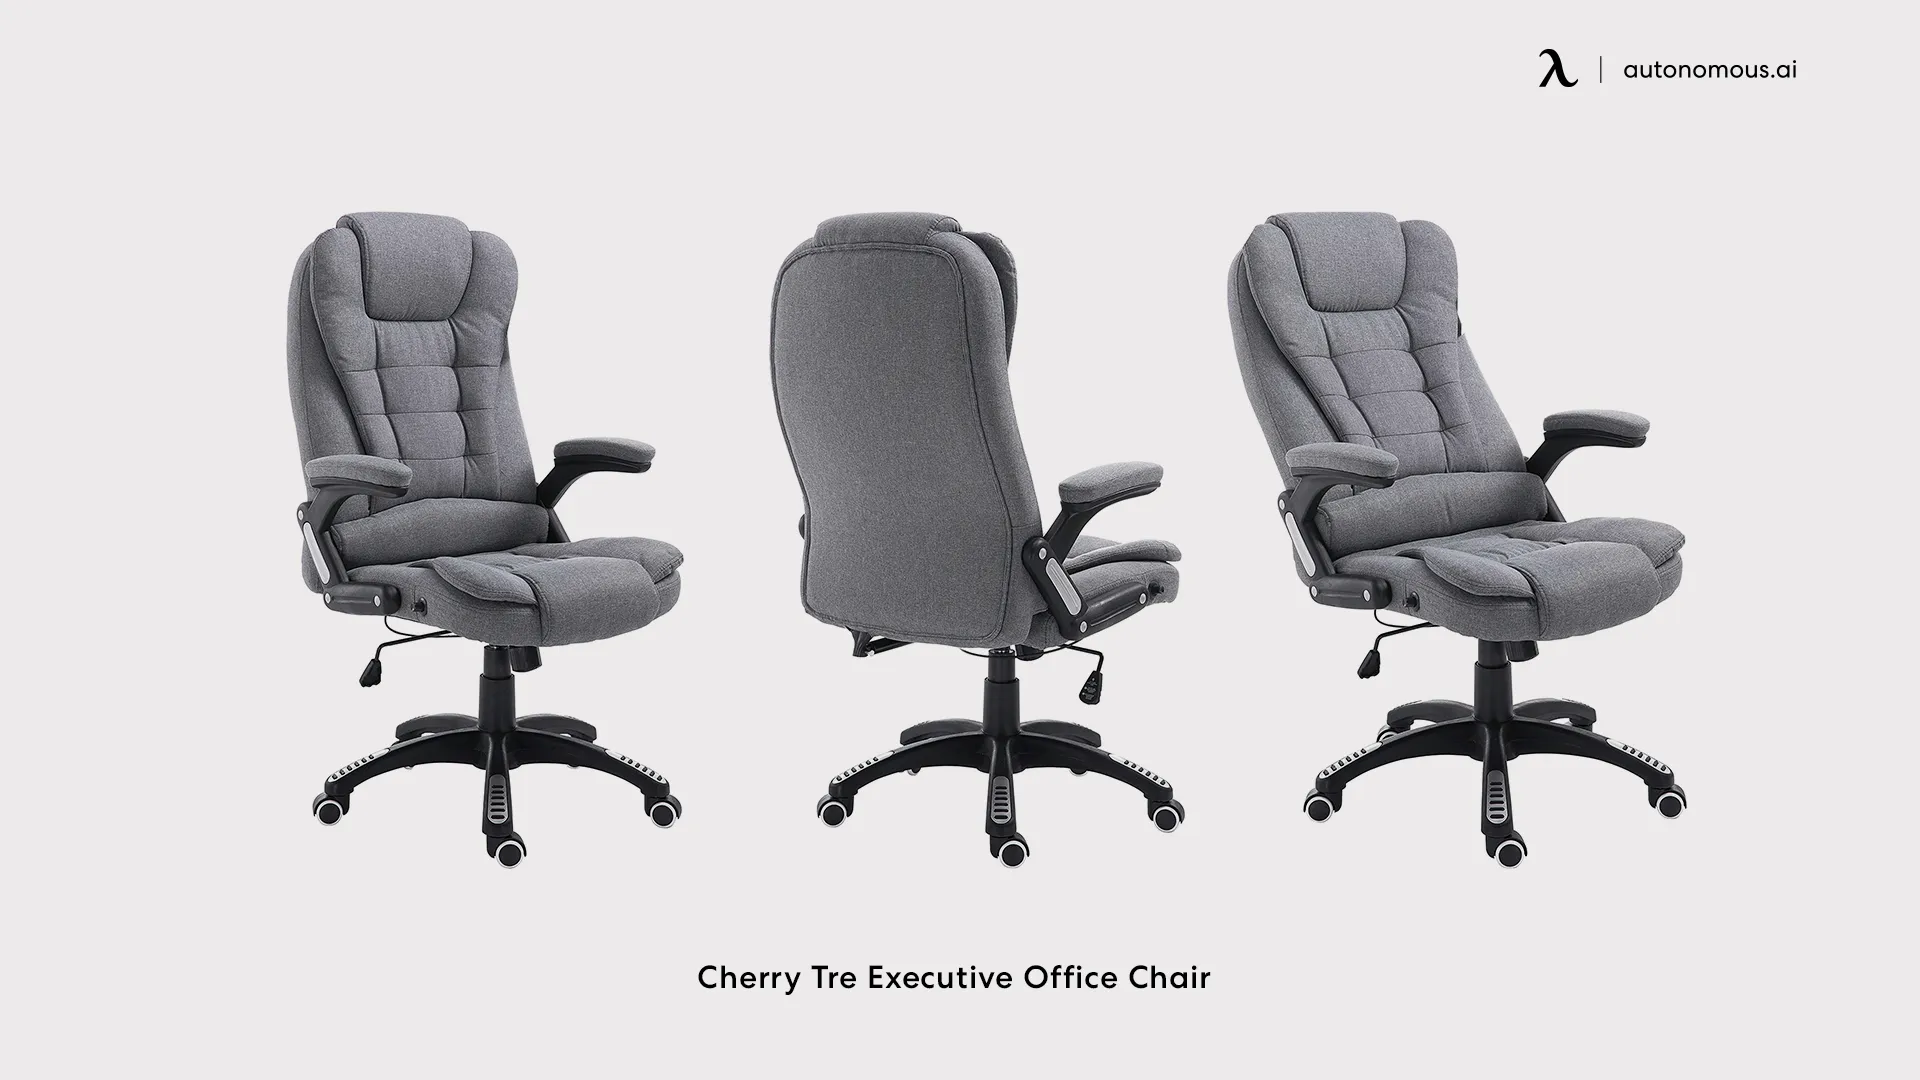 Cherry Tre Executive Office Chair